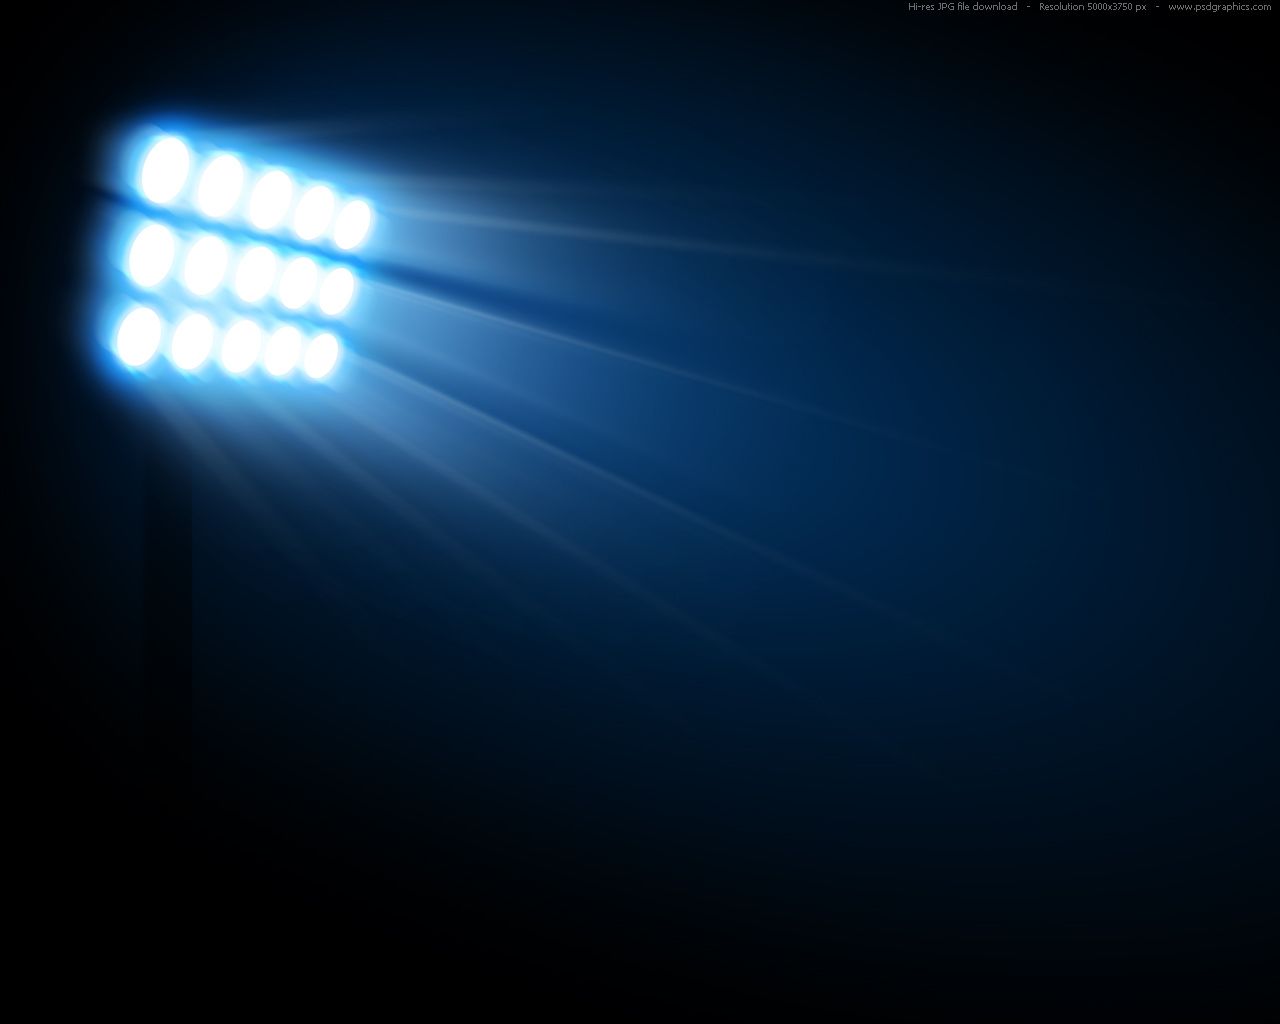 Football Lights Background